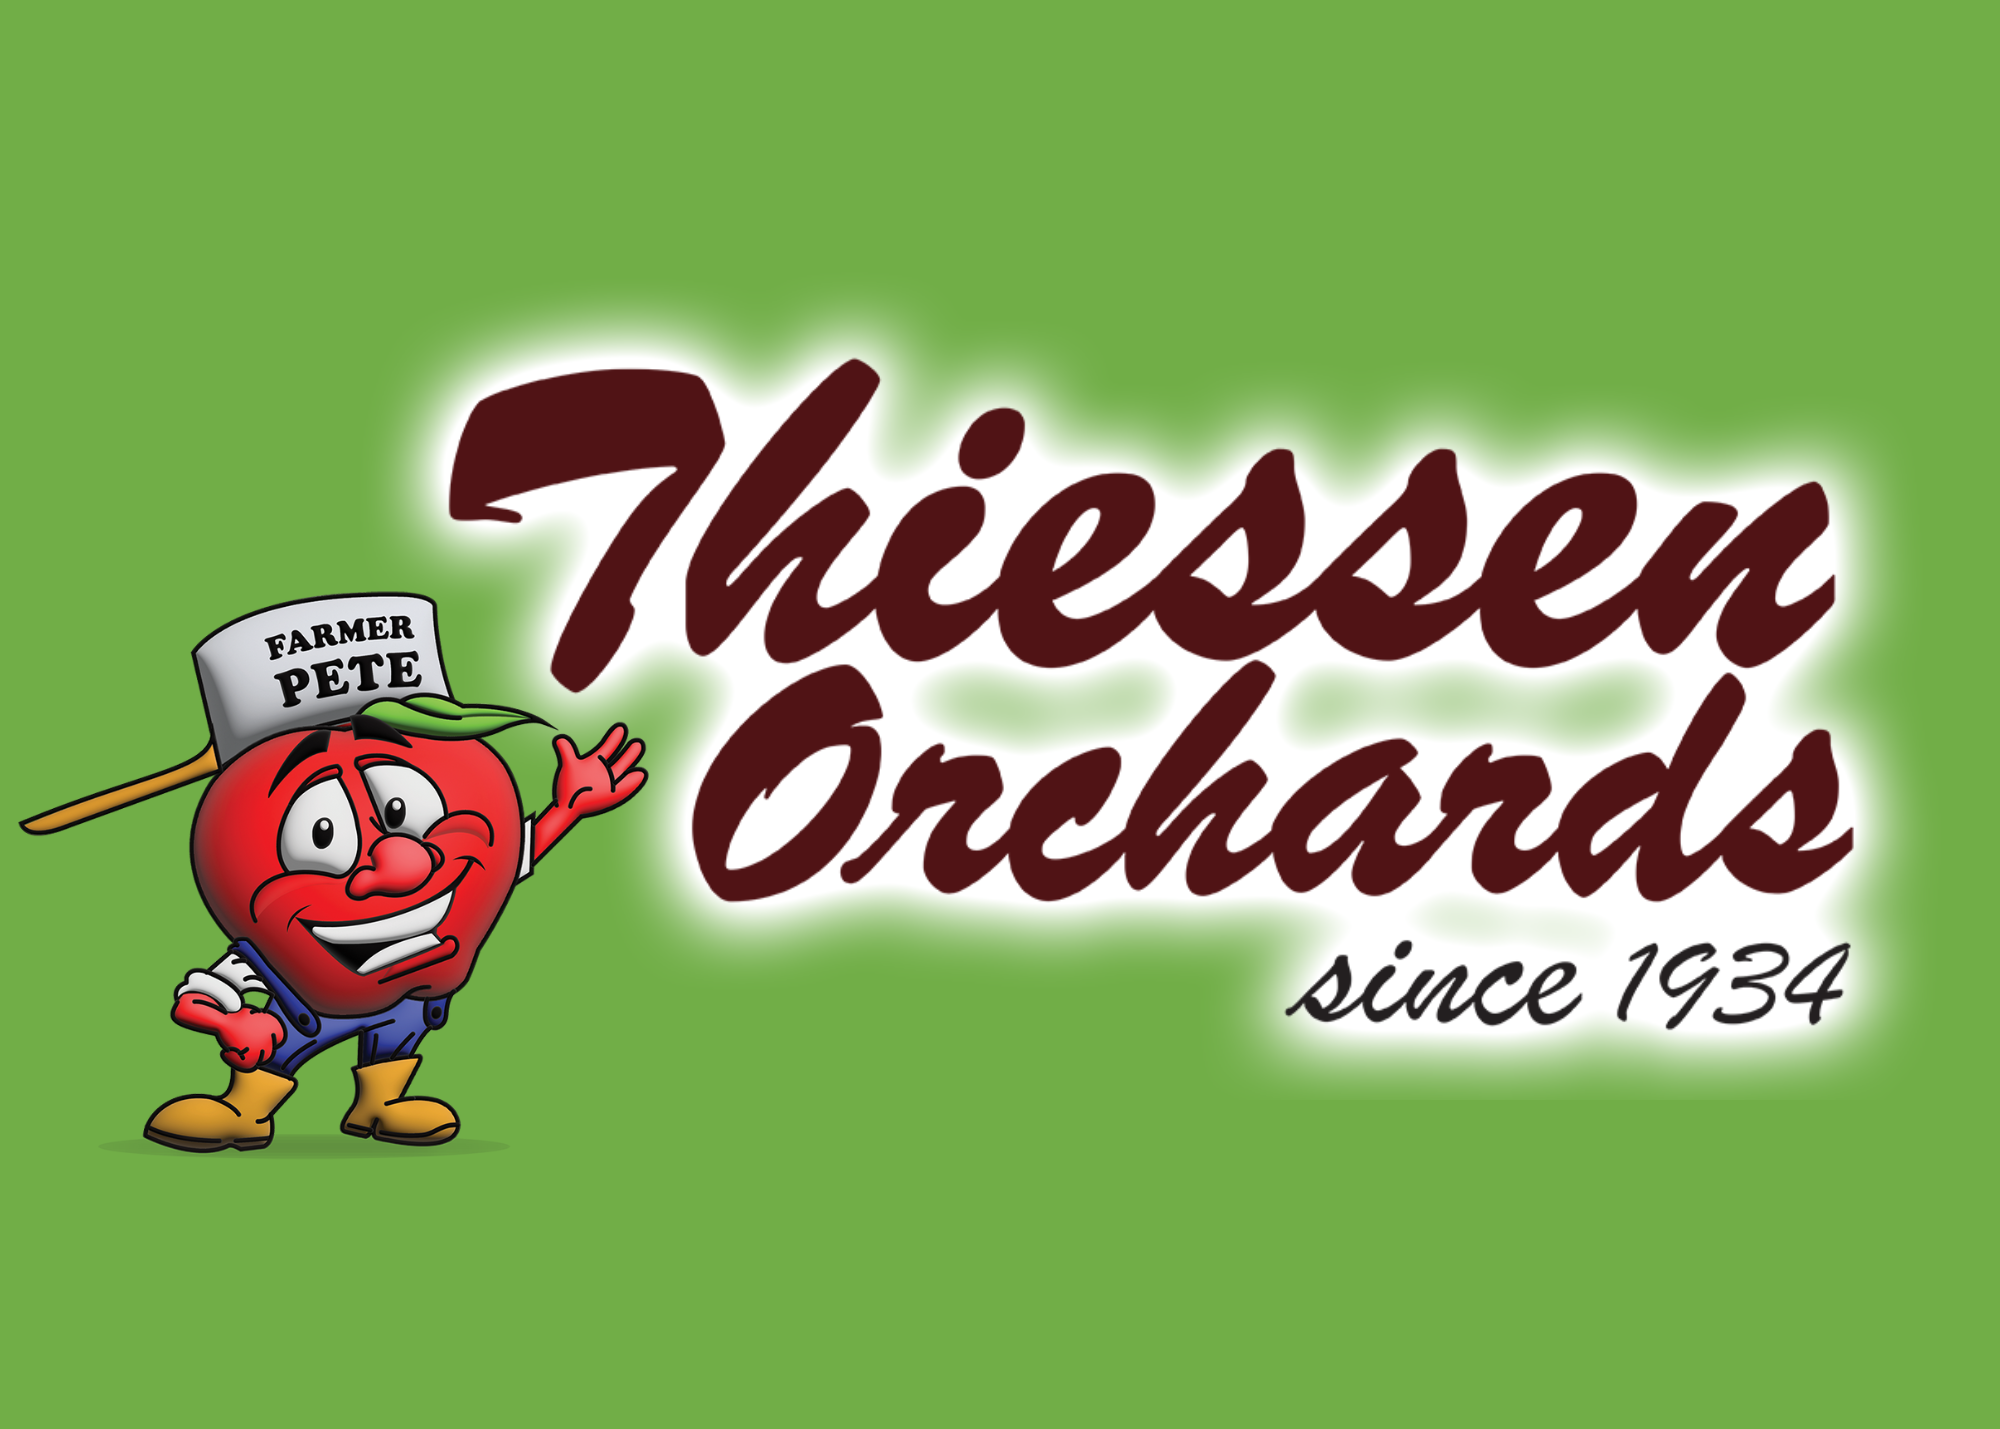 Thiessen orchards logo since 1934 farmer pete apple 